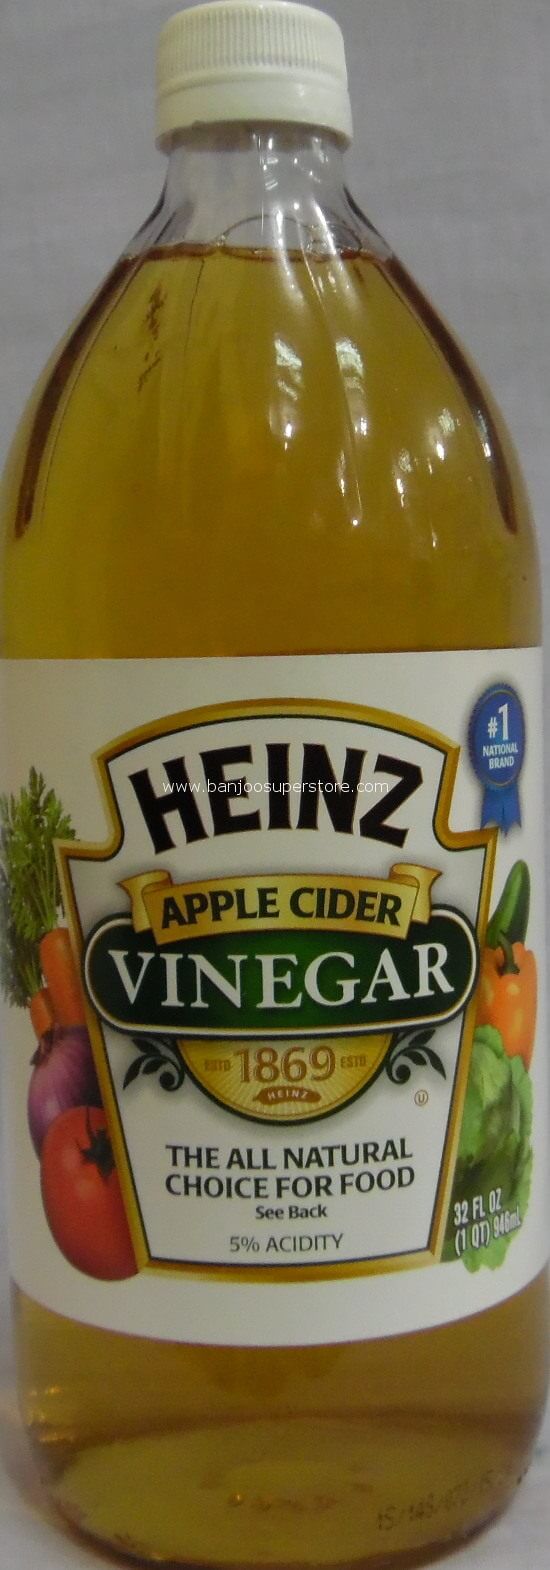 Heinz(apple cider) vinegar - Banjoo SuperStore